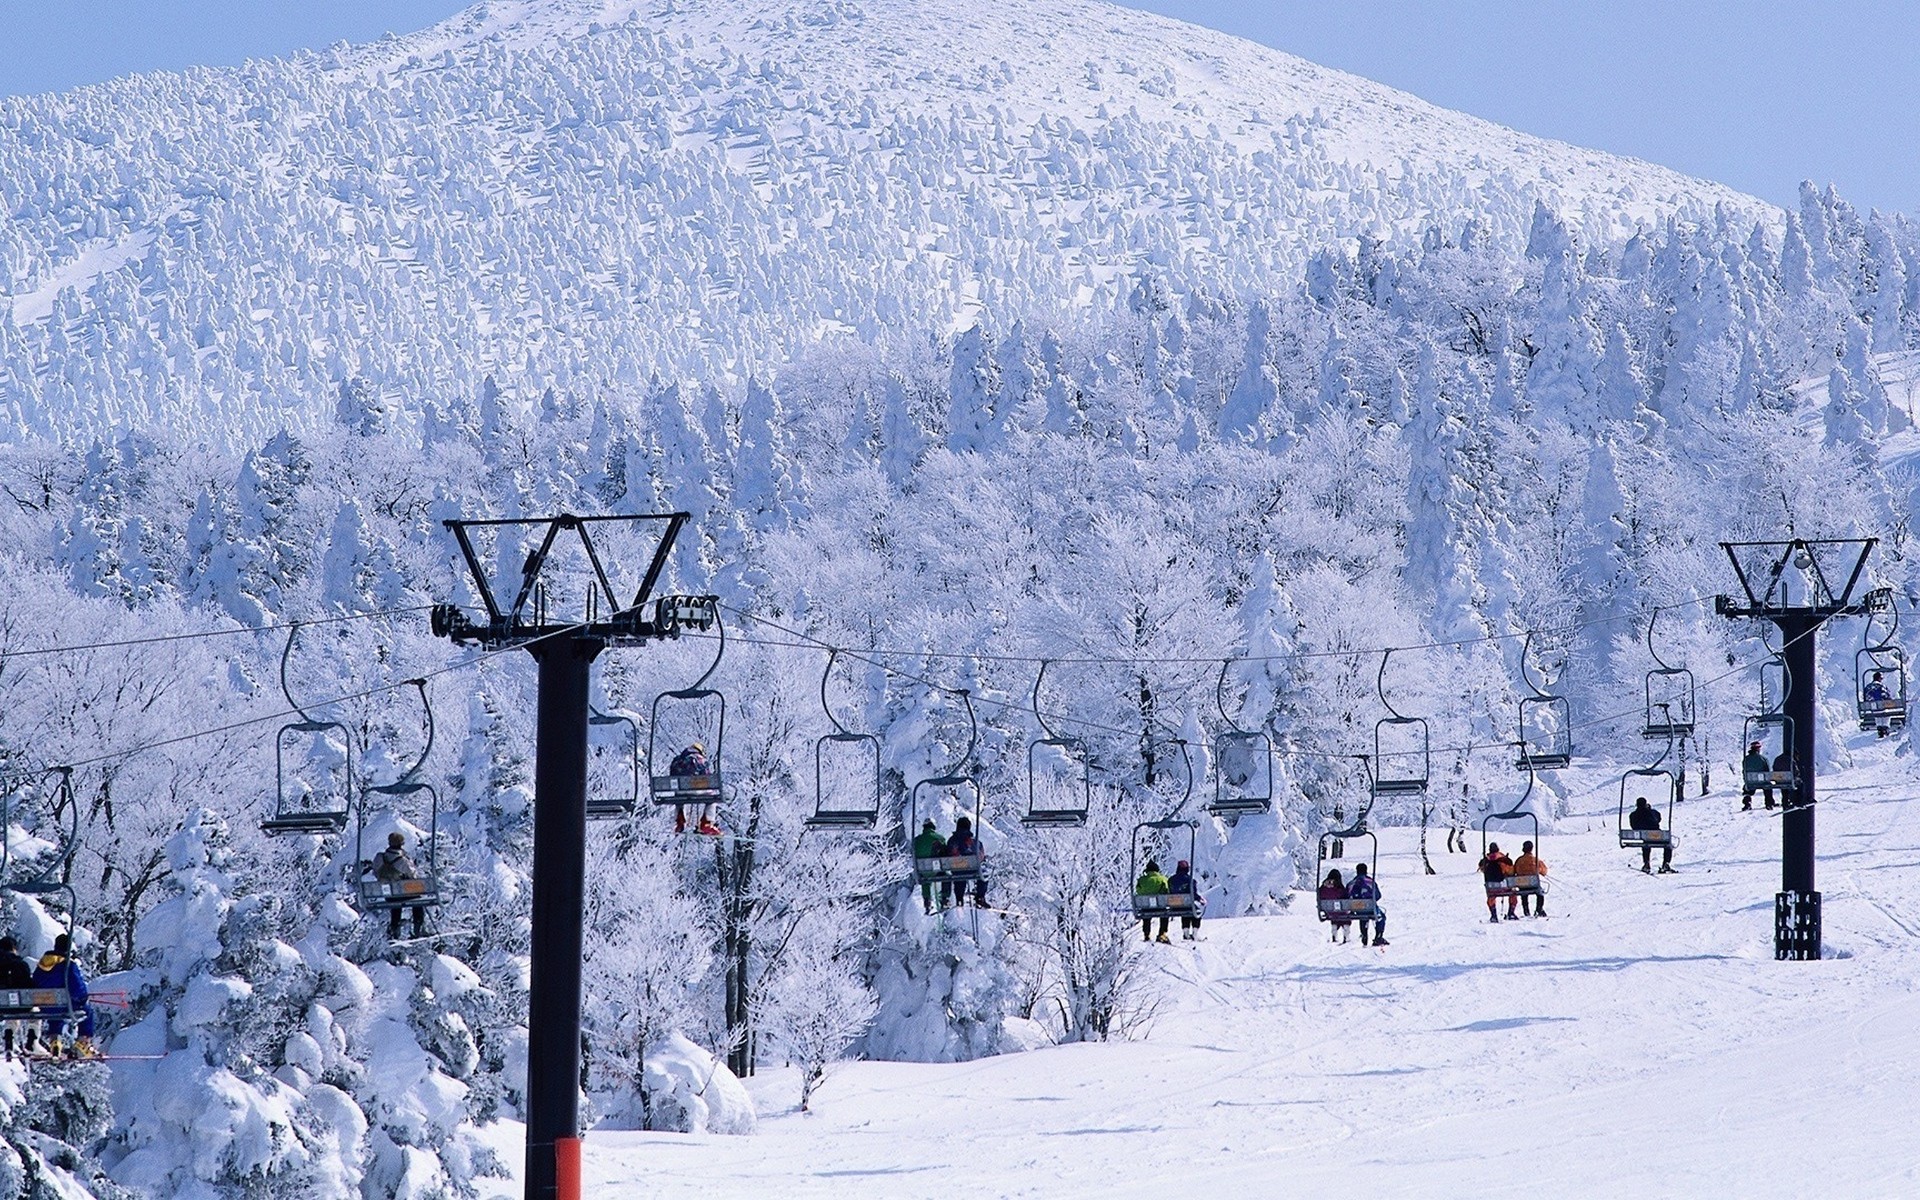 General 1920x1200 landscape ski resort skiing ski lifts winter nature outdoors people snow